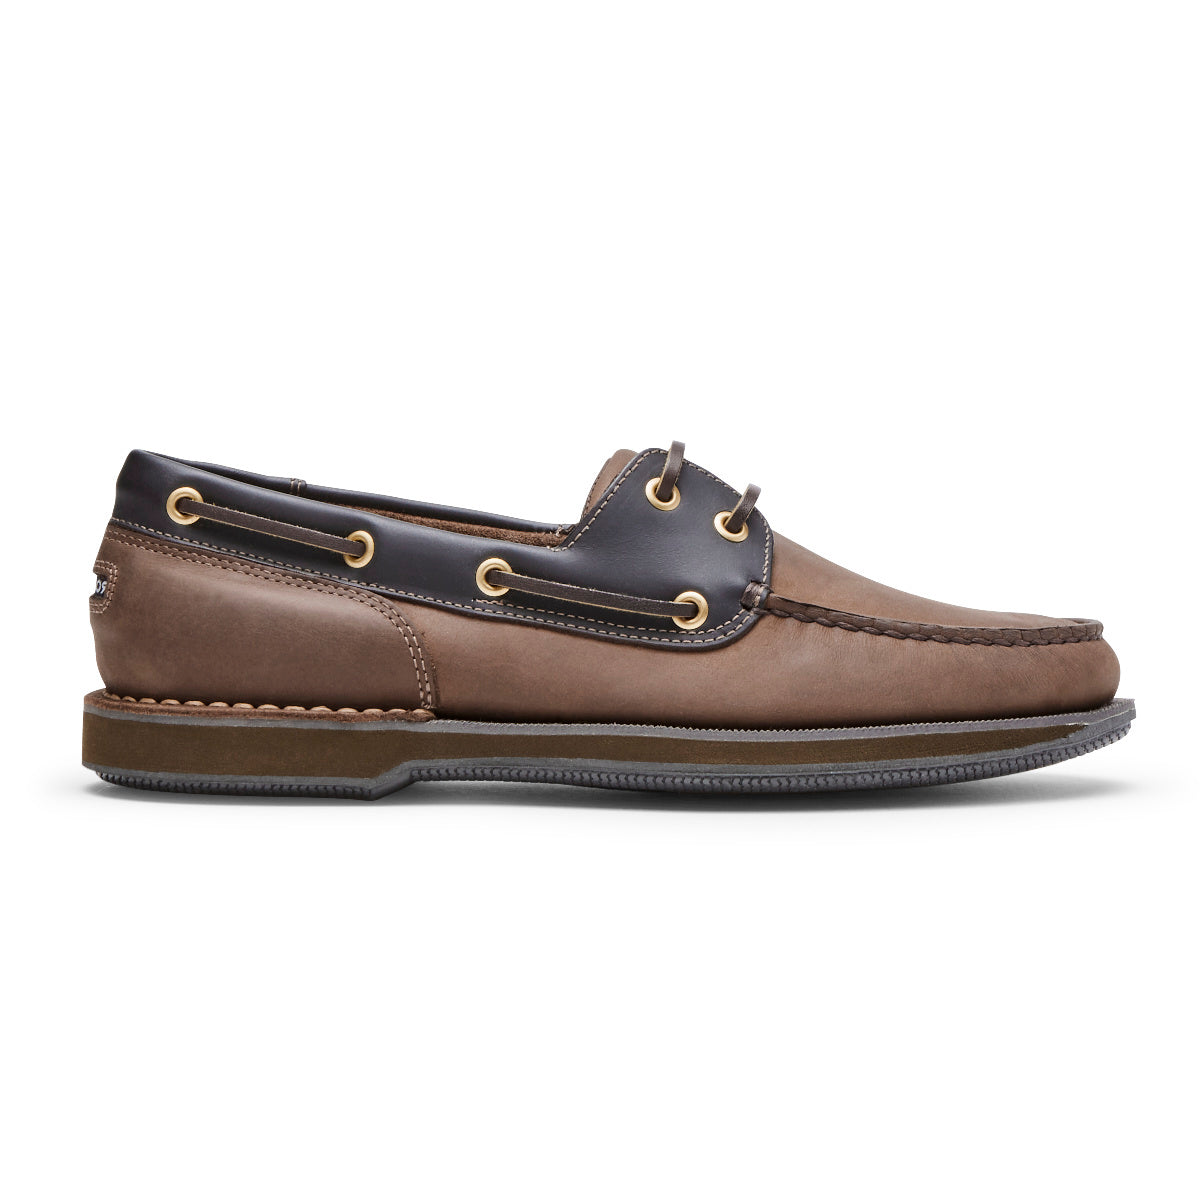 Zapatos Rockport Confort Hombre Size 8(41) – Calzados Figuereo